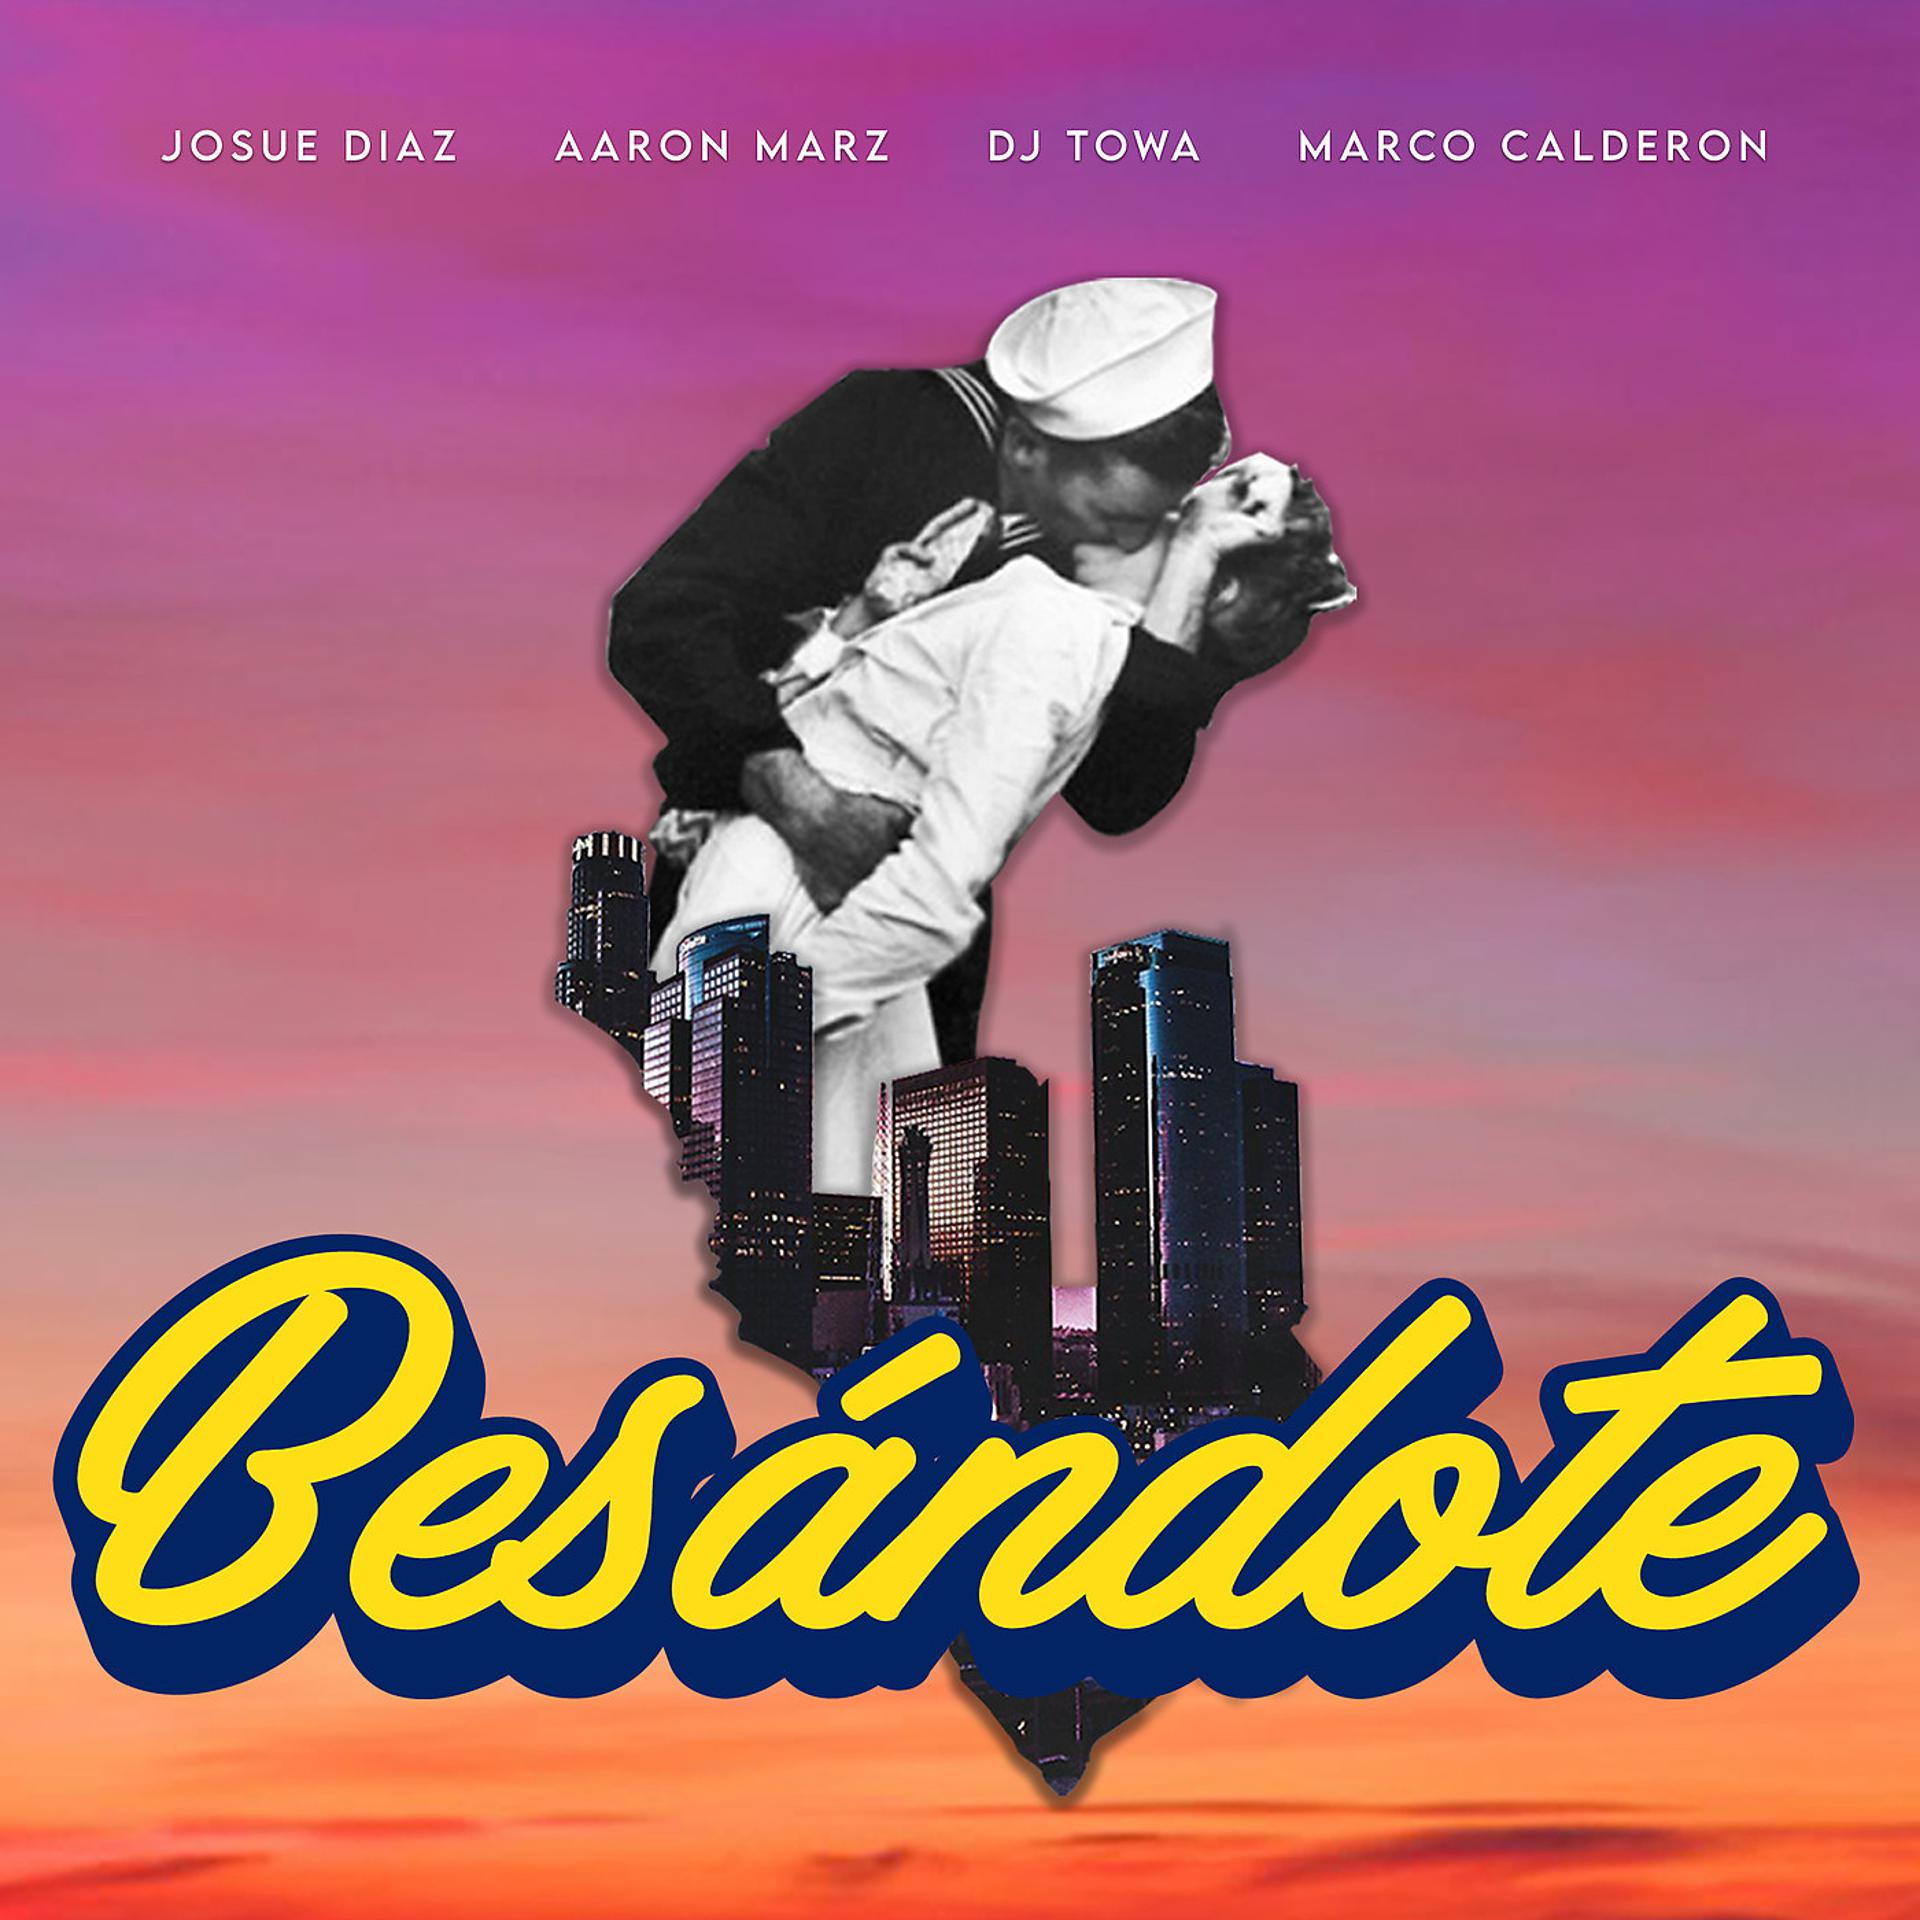 Постер альбома Besándote